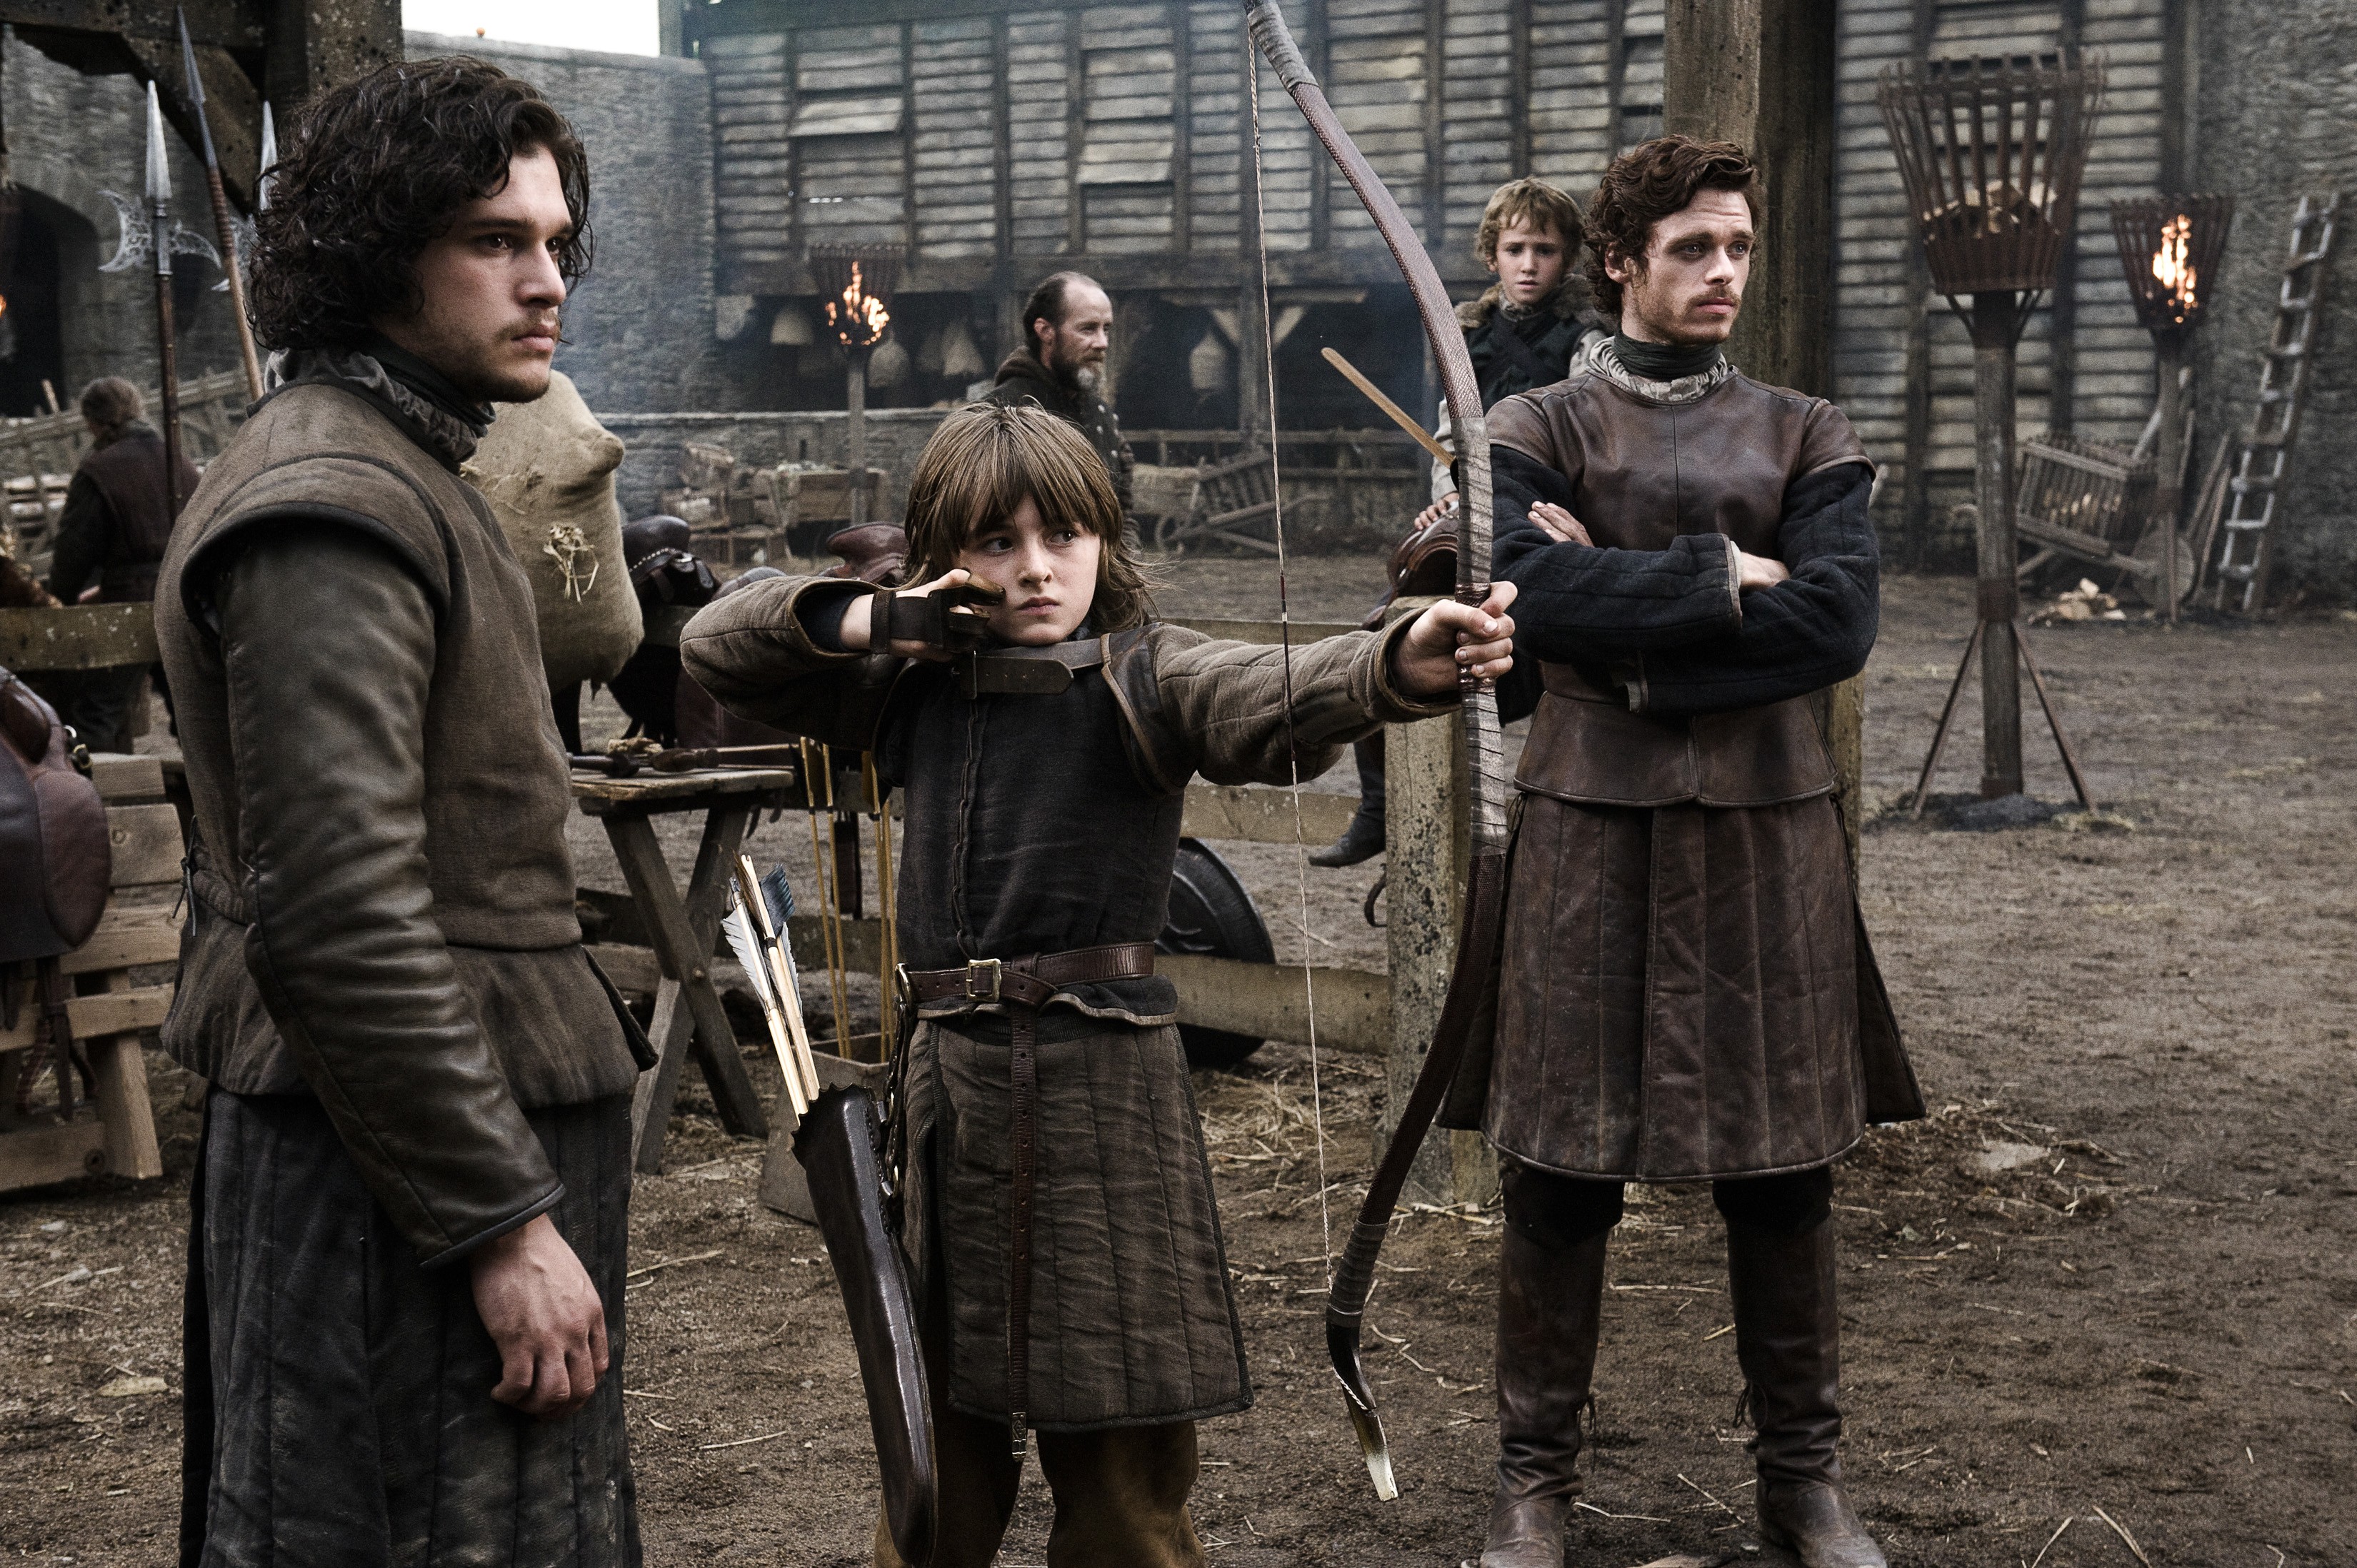 General 3300x2196 Game of Thrones Jon Snow Robb Stark Bran Stark Brandon Stark Kit Harington TV series actor children men bow film stills